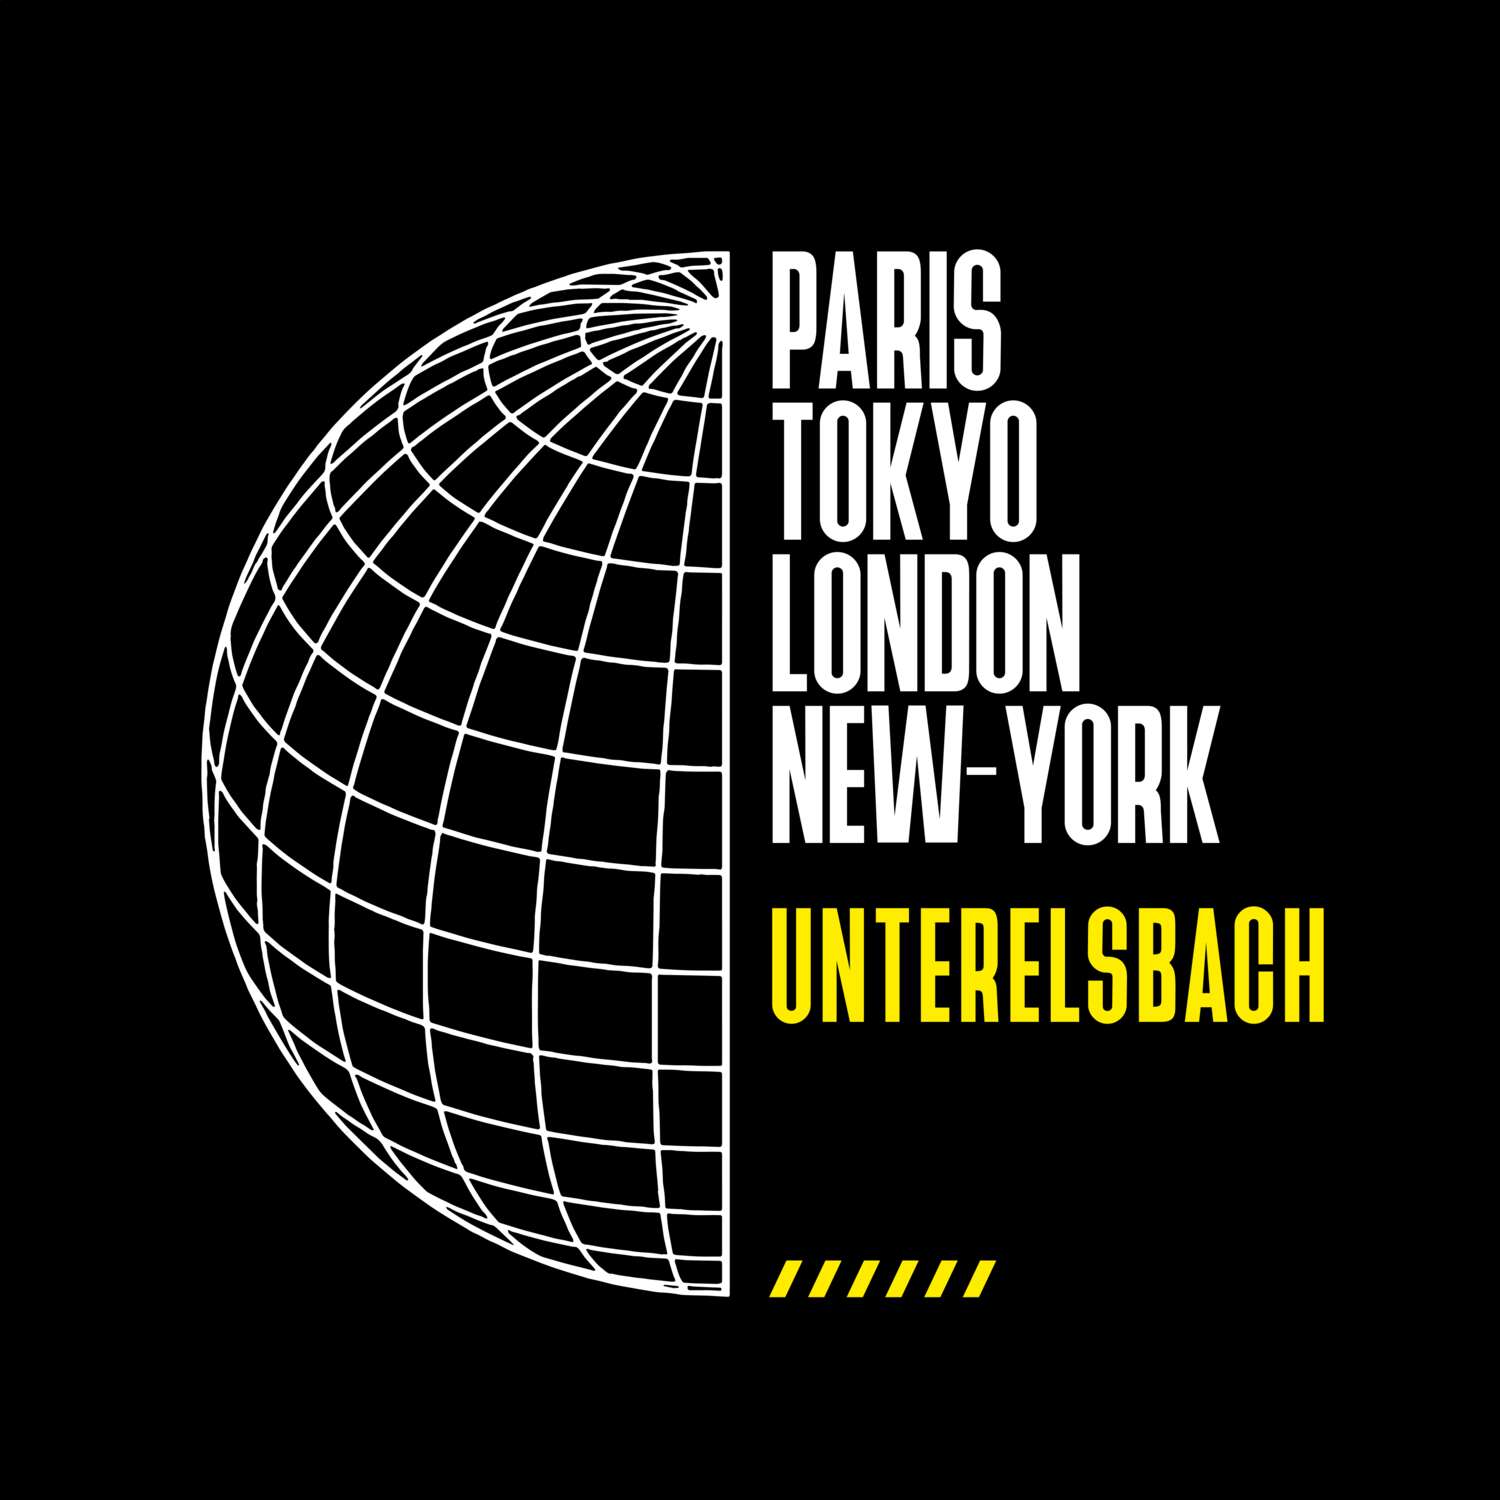 Unterelsbach T-Shirt »Paris Tokyo London«